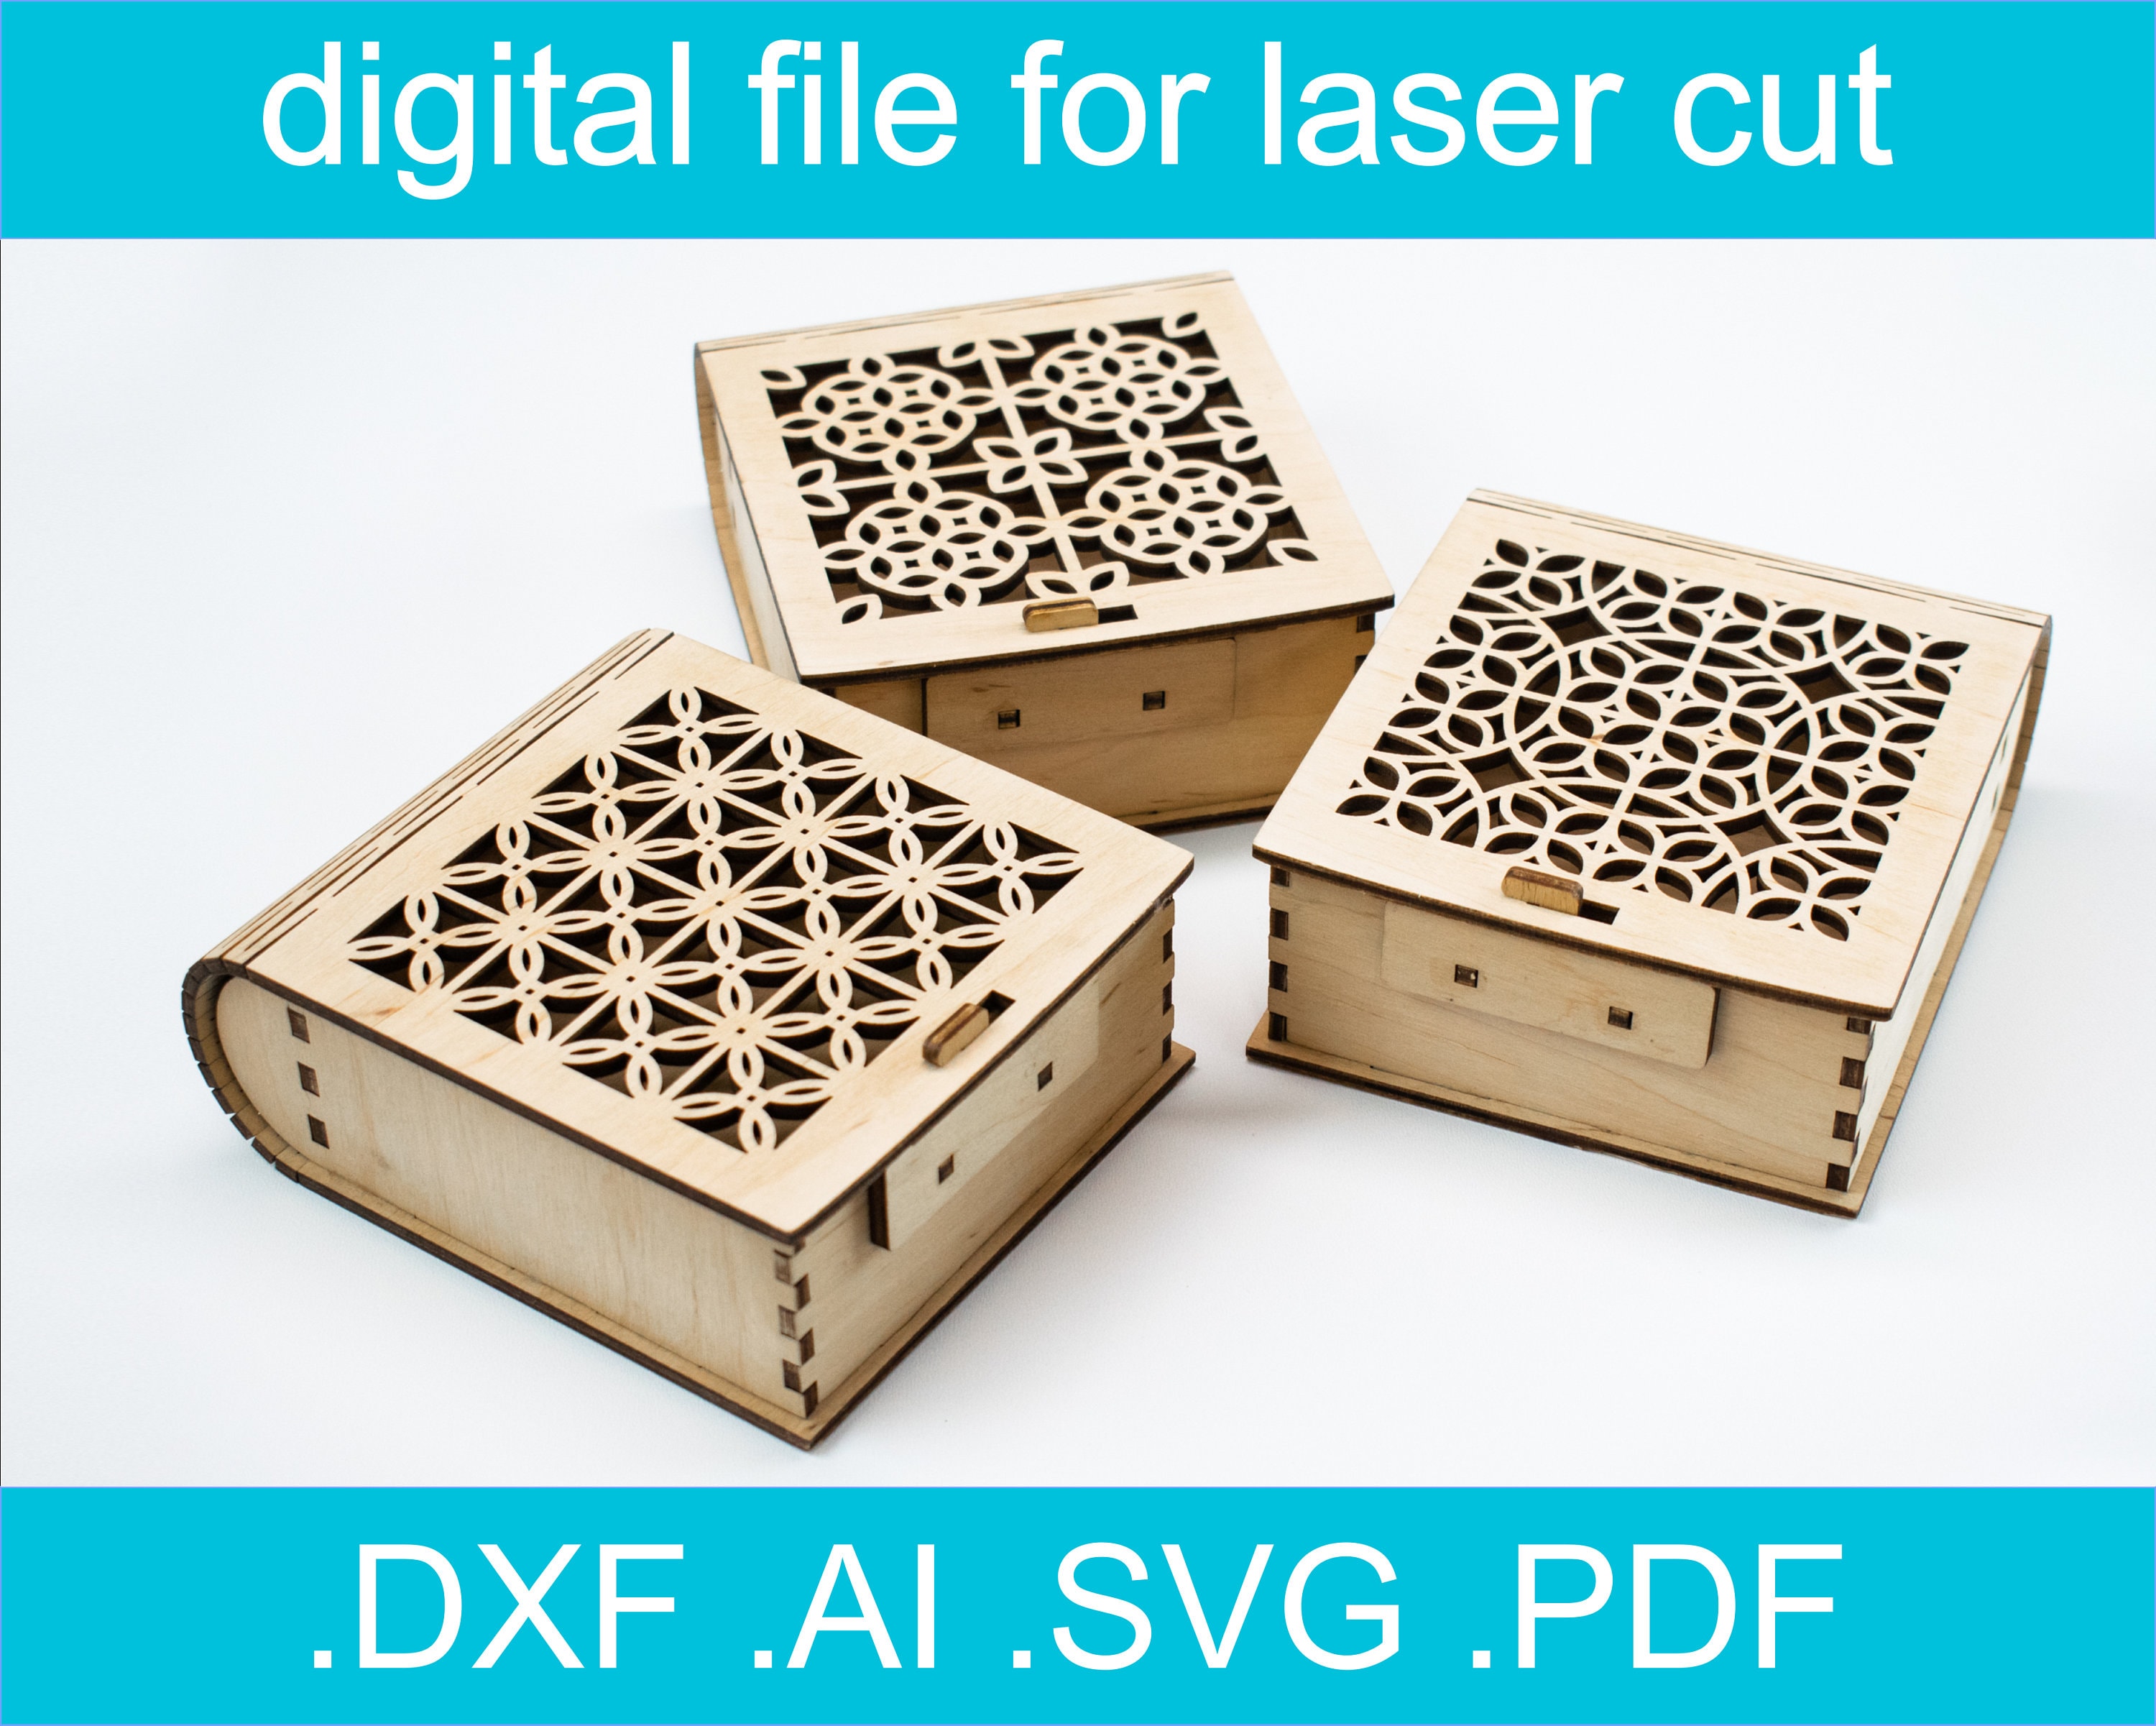 (Instant Print) Digital Download - Wood slice bundle for our new wood